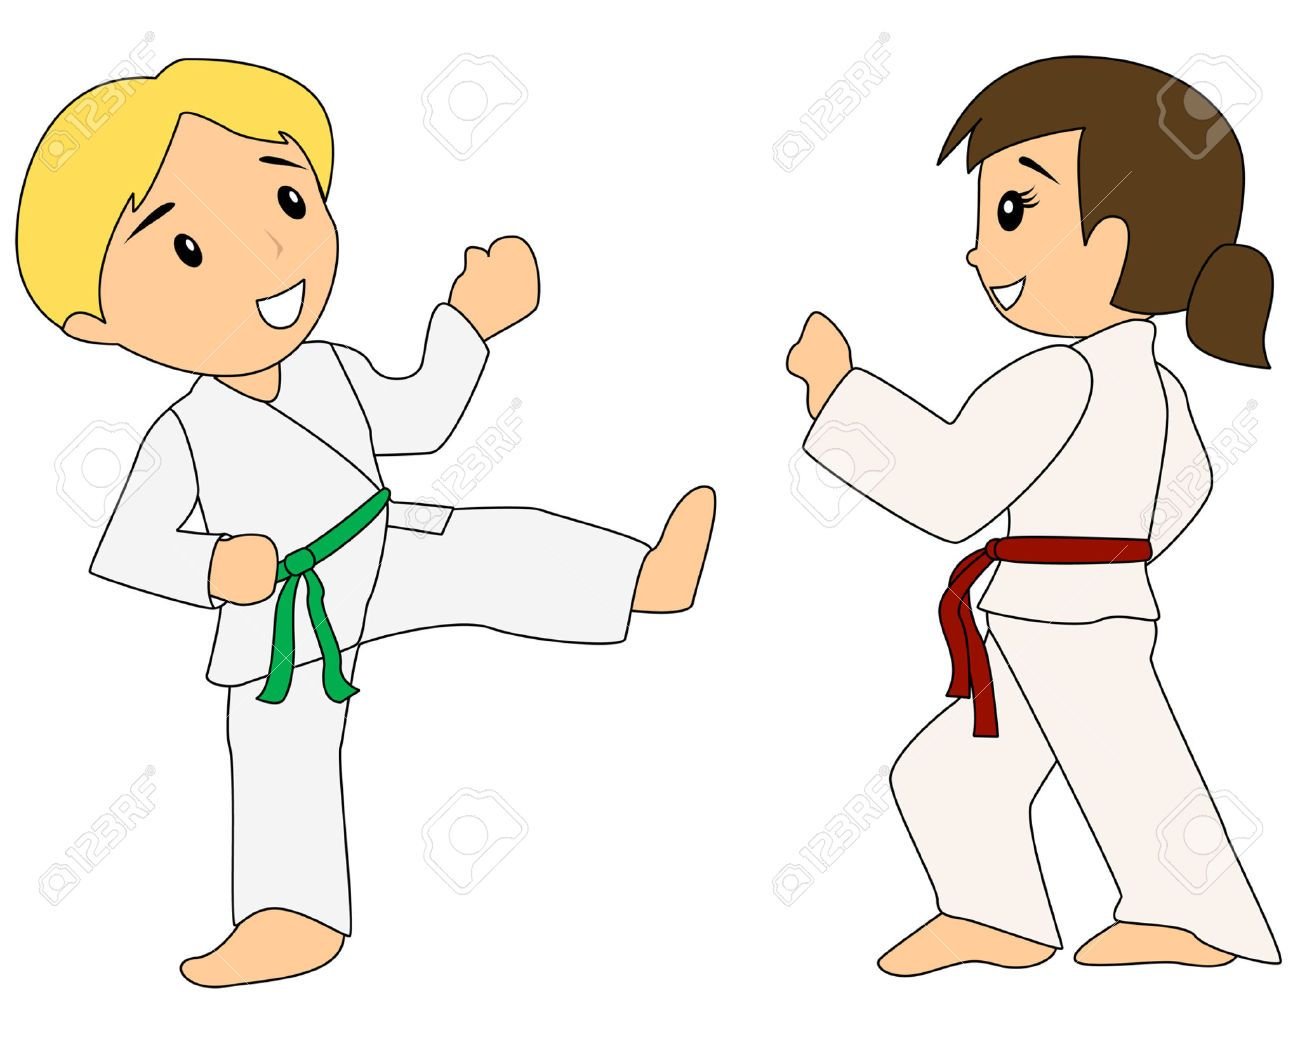 Тхэквондо на английском. Рисунок на тему каратэ. Занятия карате. Каратэ вид спорта для детей. Карате дети занятия.